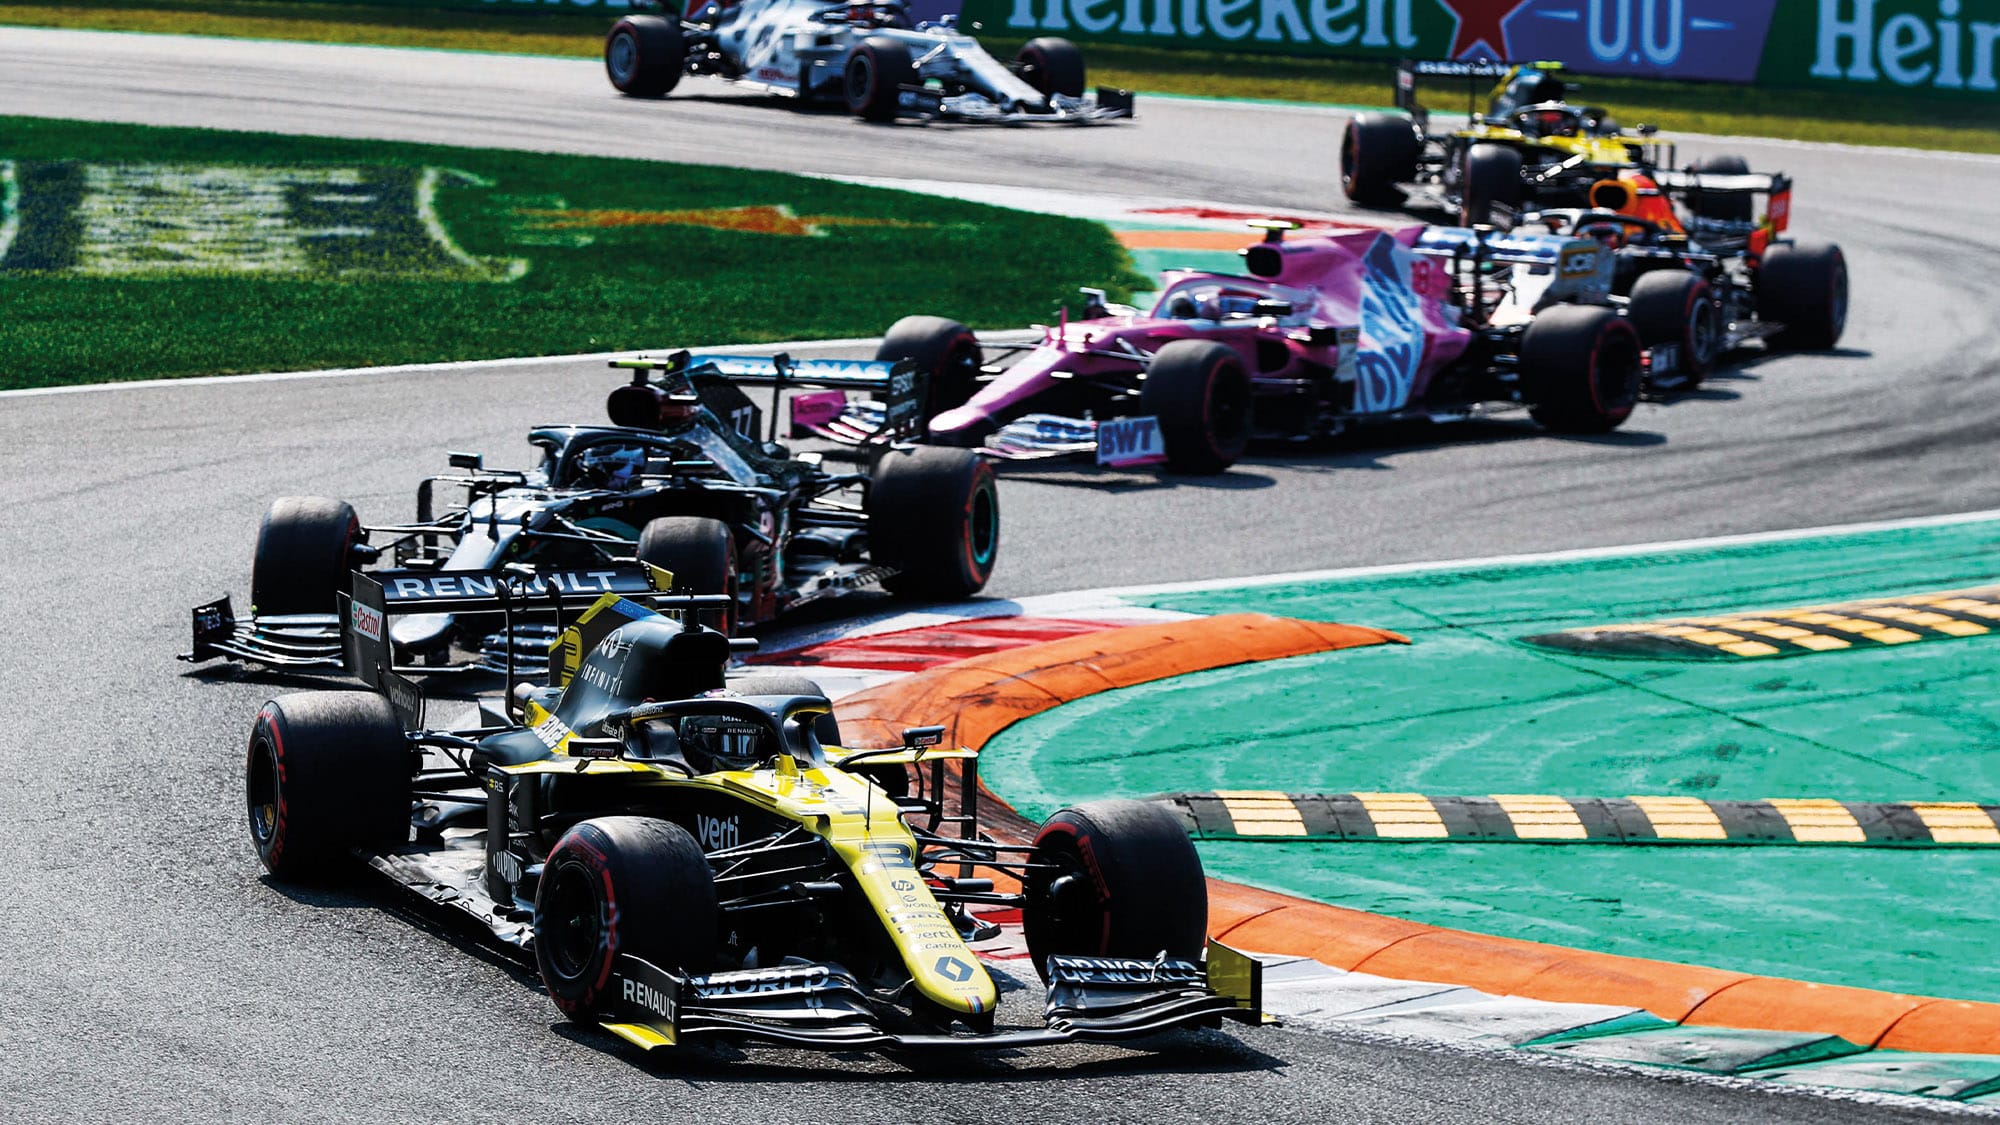 Daniel Ricciardo leads Valtteri Bottas in the 2020 Italian Grand Prix